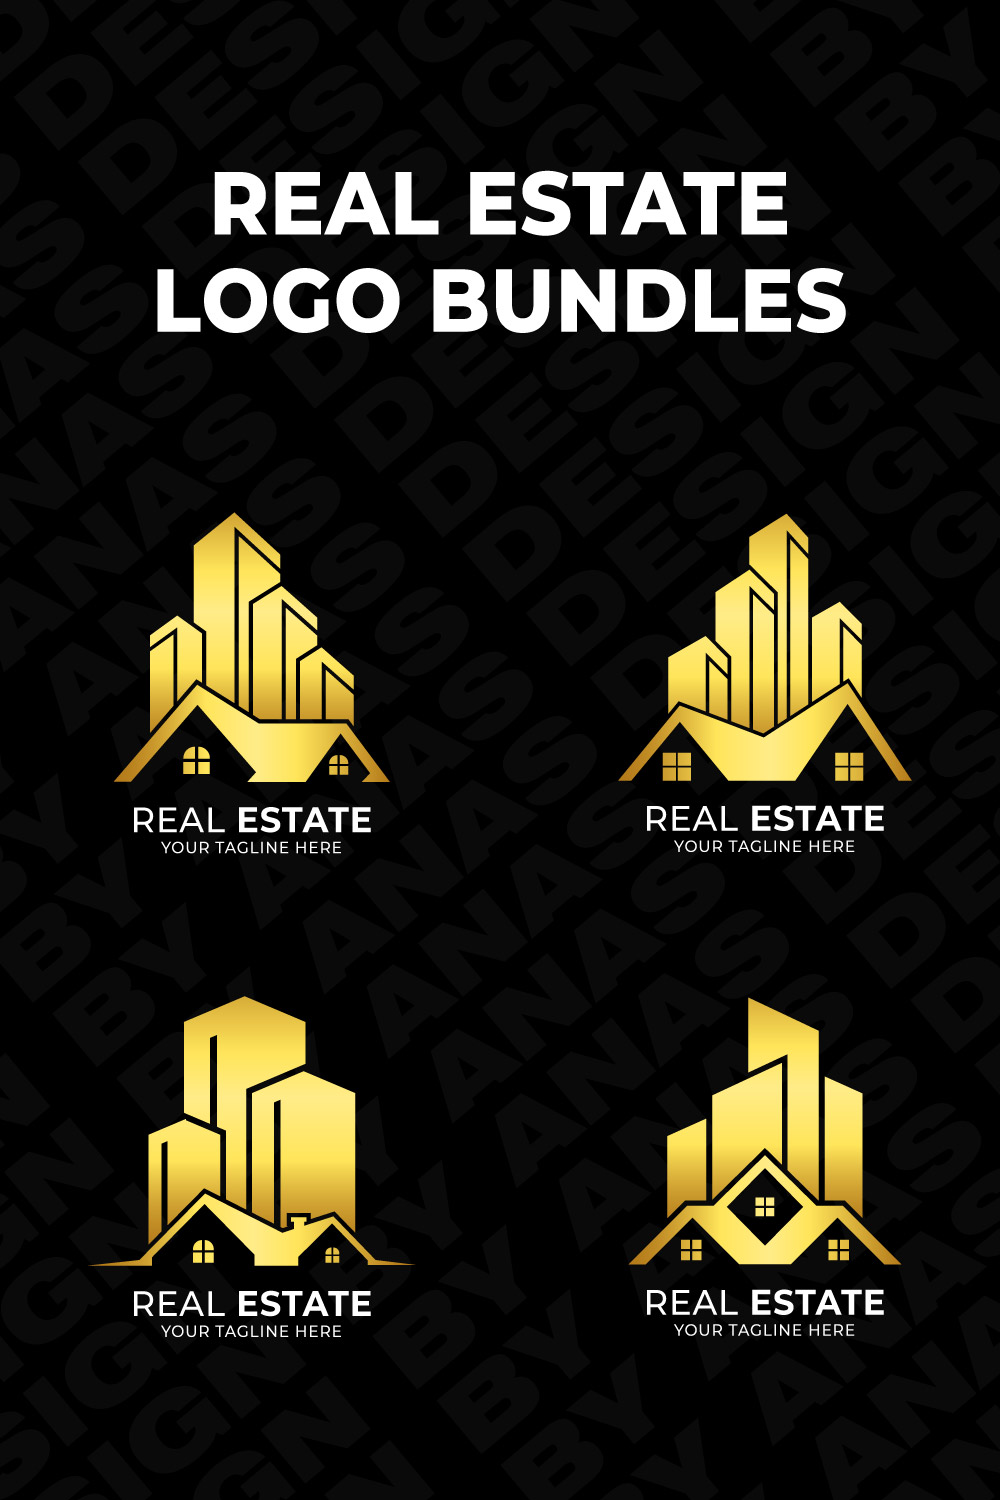 4 Luxury Real Estate Logos , Building Logos Bundle pinterest preview image.